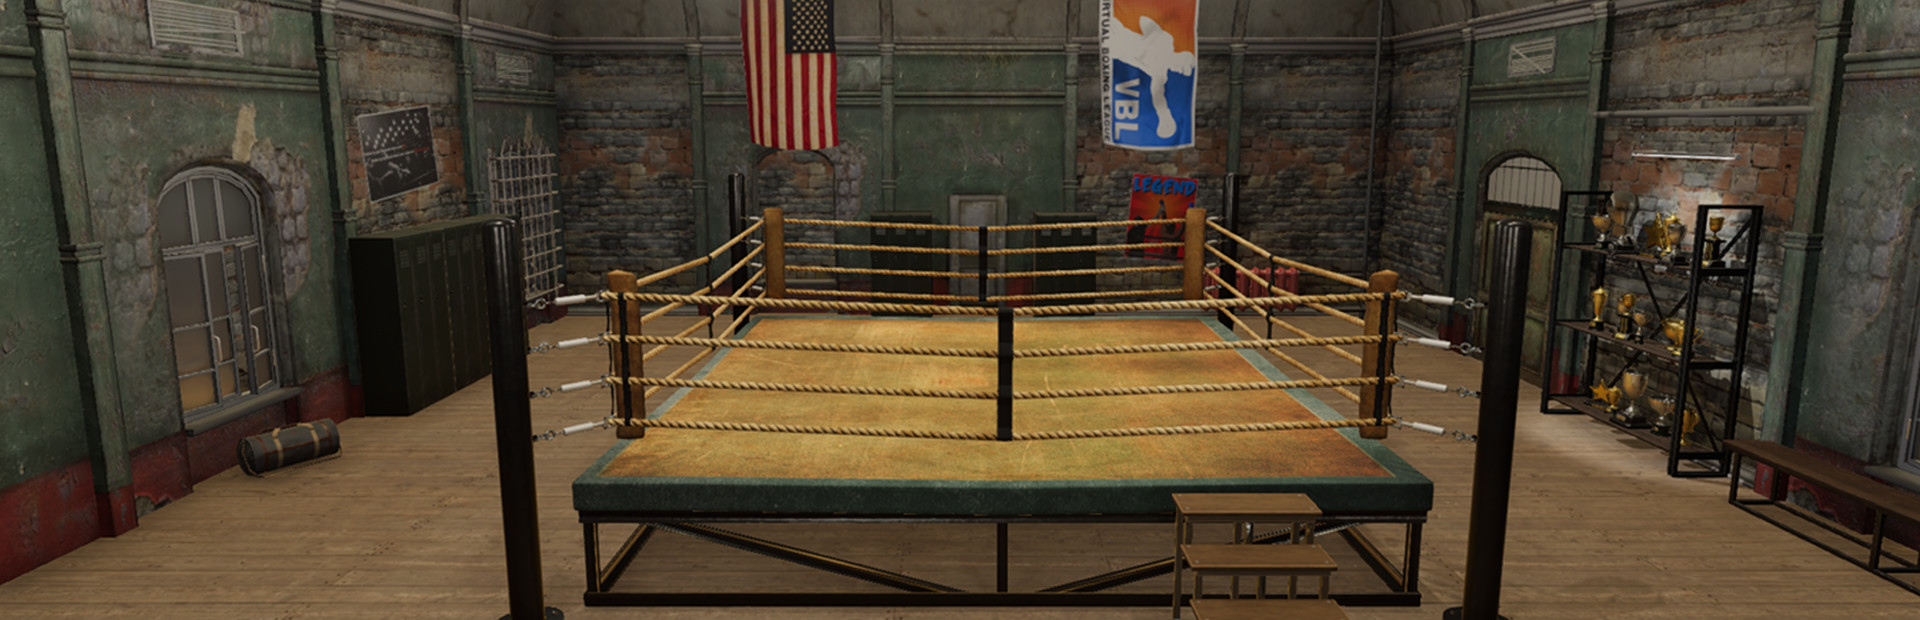 Virtual Boxing League cover image